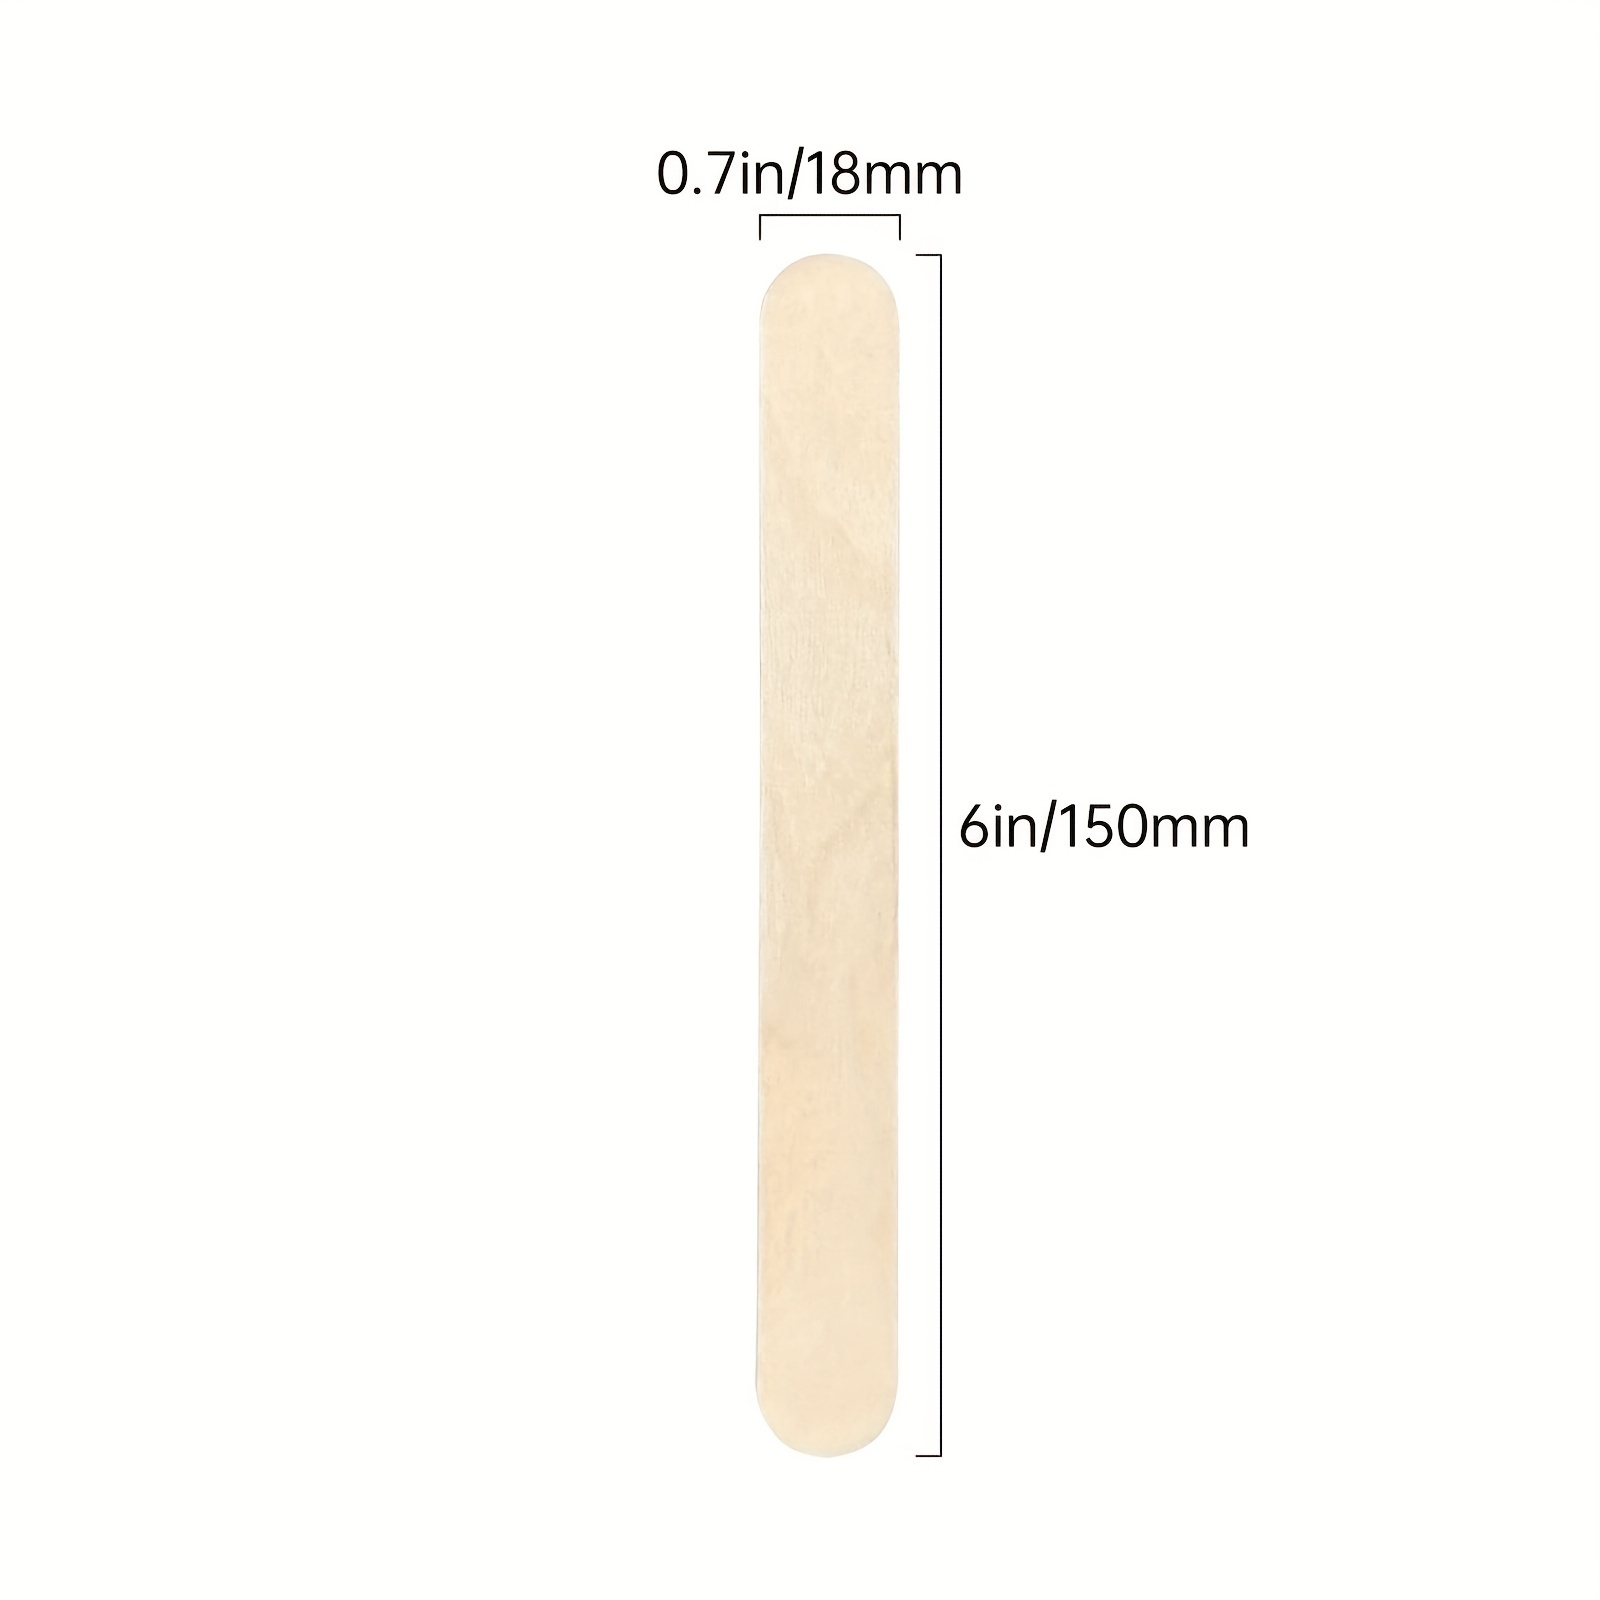 Popsicle Stick for Craft Supplies Sticks - Premium Quality 100 pcs